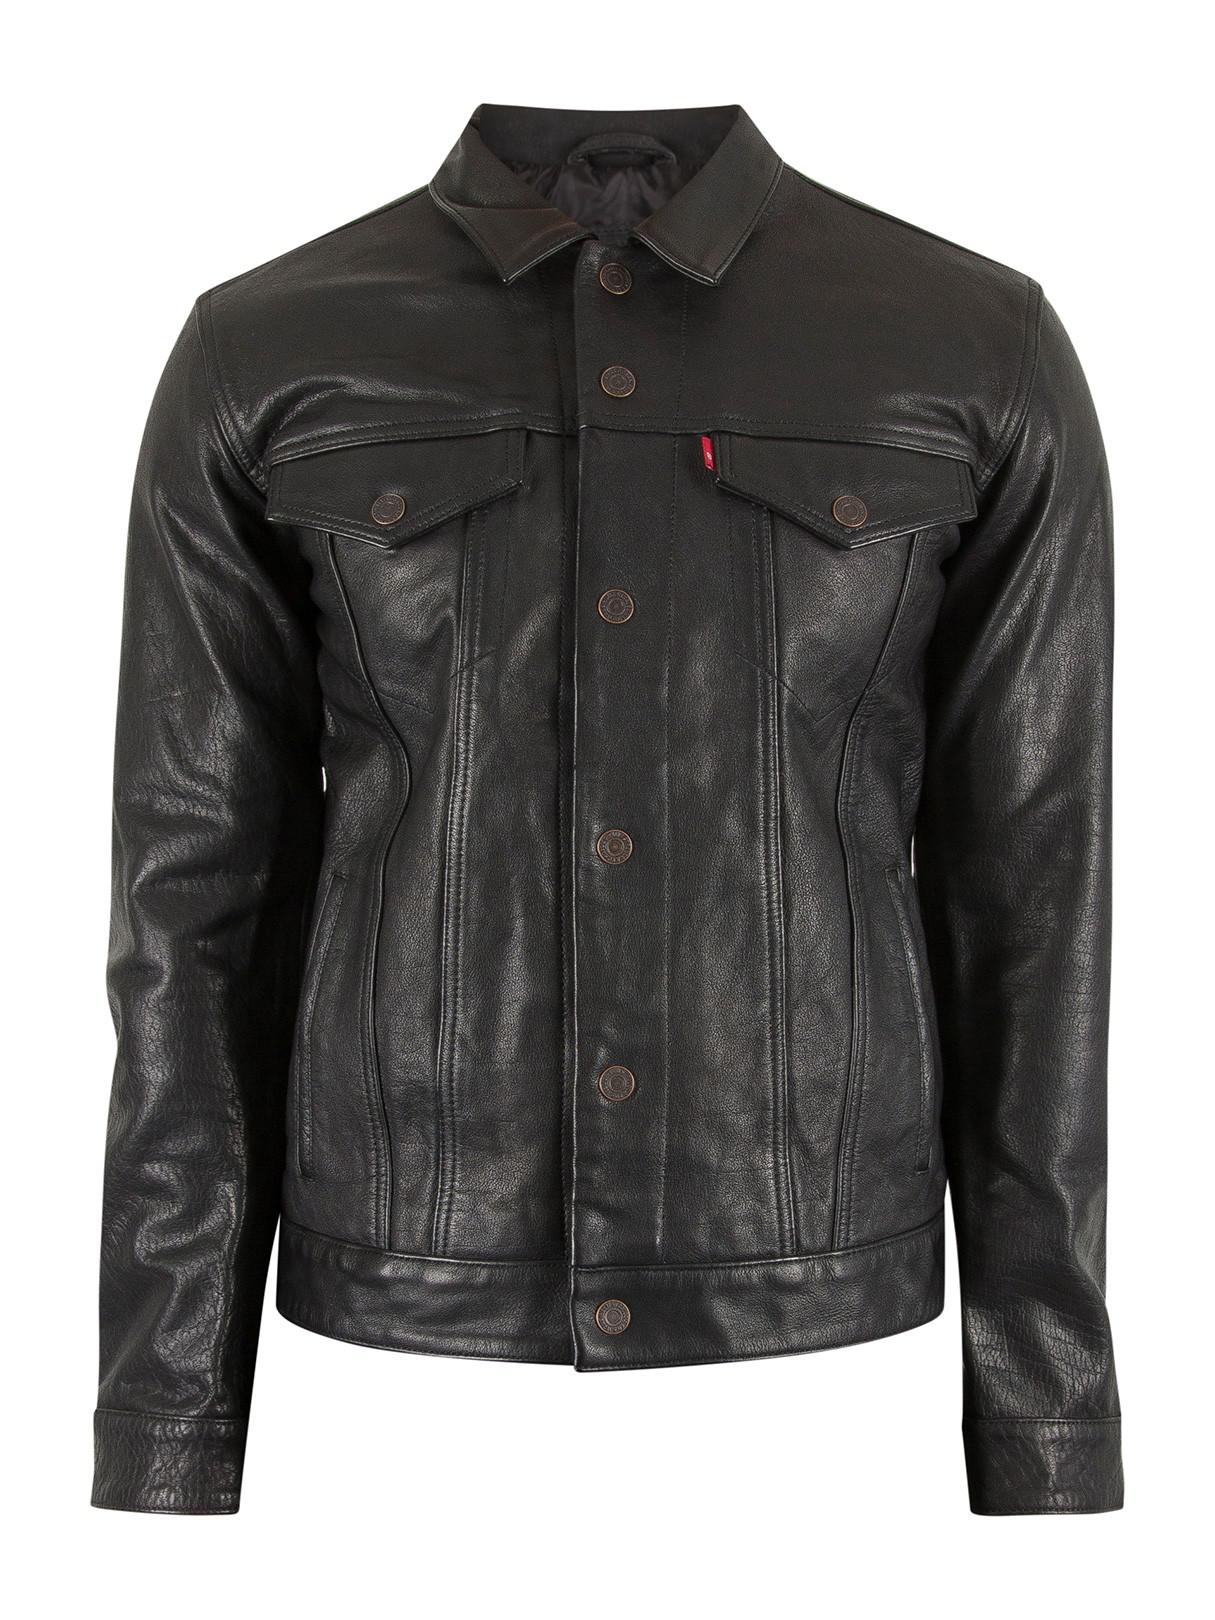 levi's buffalo leather trucker jacket